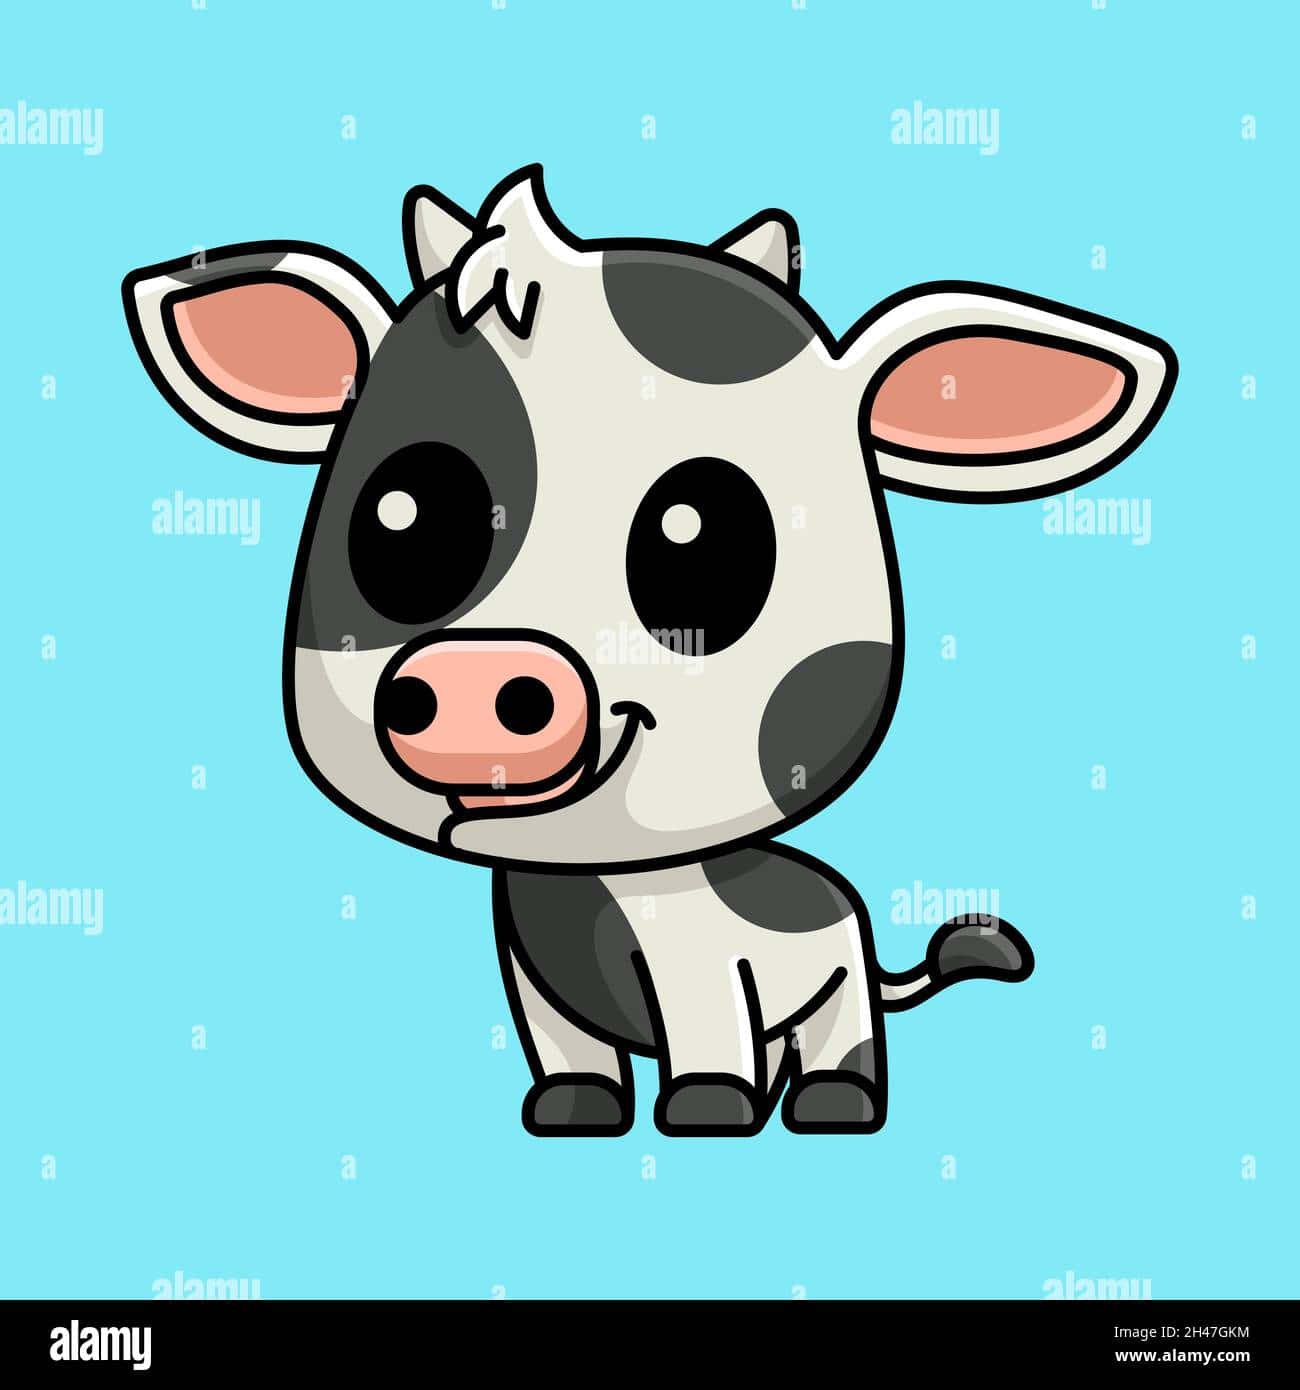 Cute Cow Wallpaper  NawPic